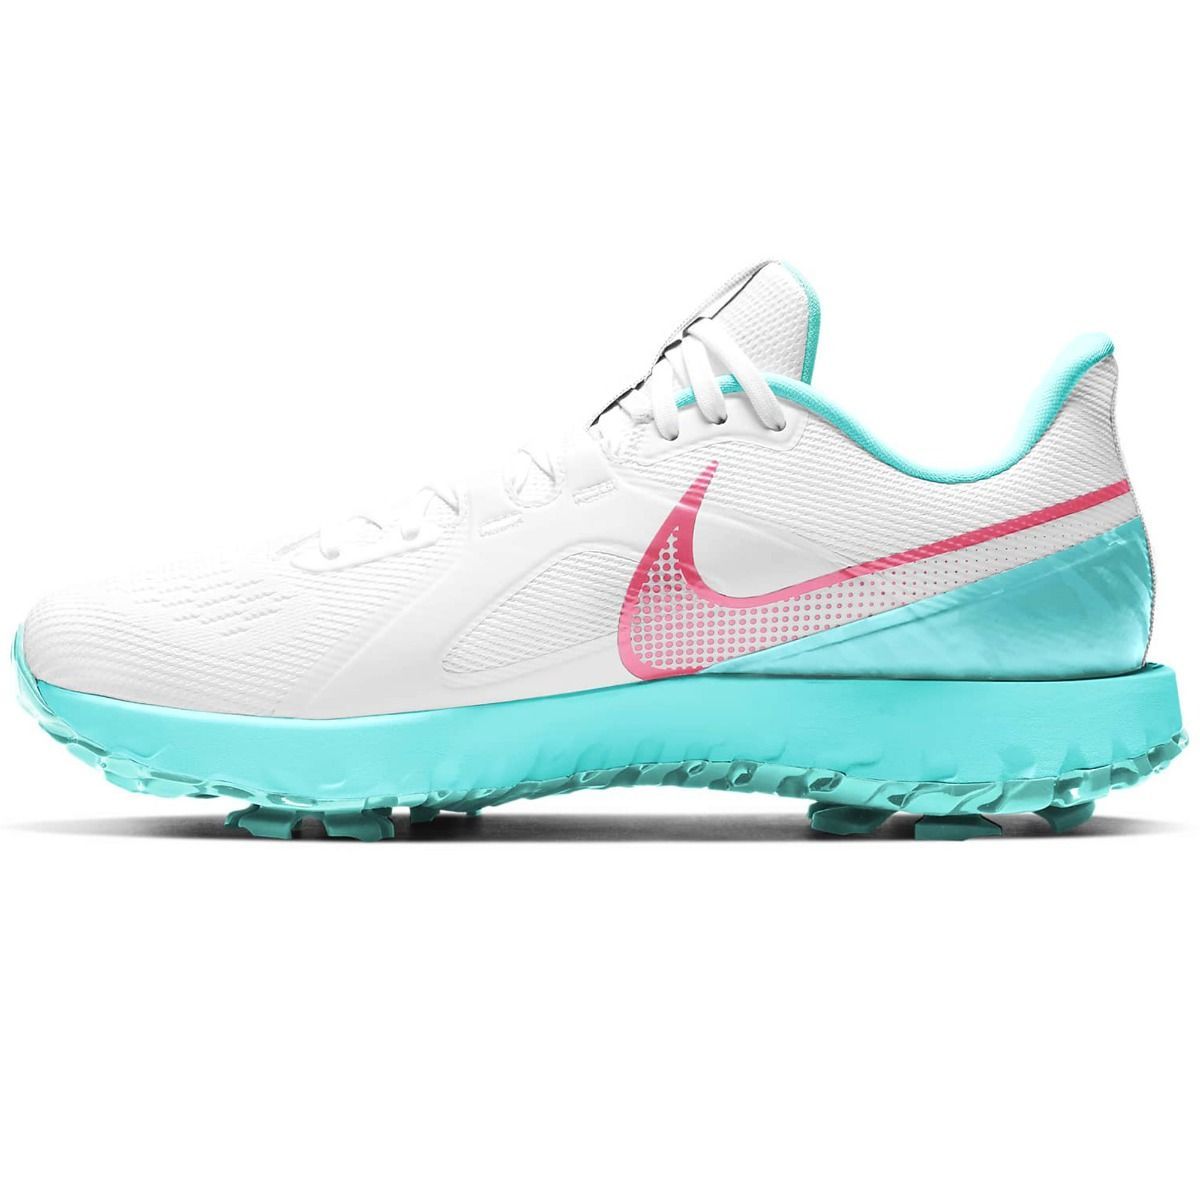 Nike React Infinity Pro Golf Shoes White/Aurora/Hot Punch | Scottsdale Golf